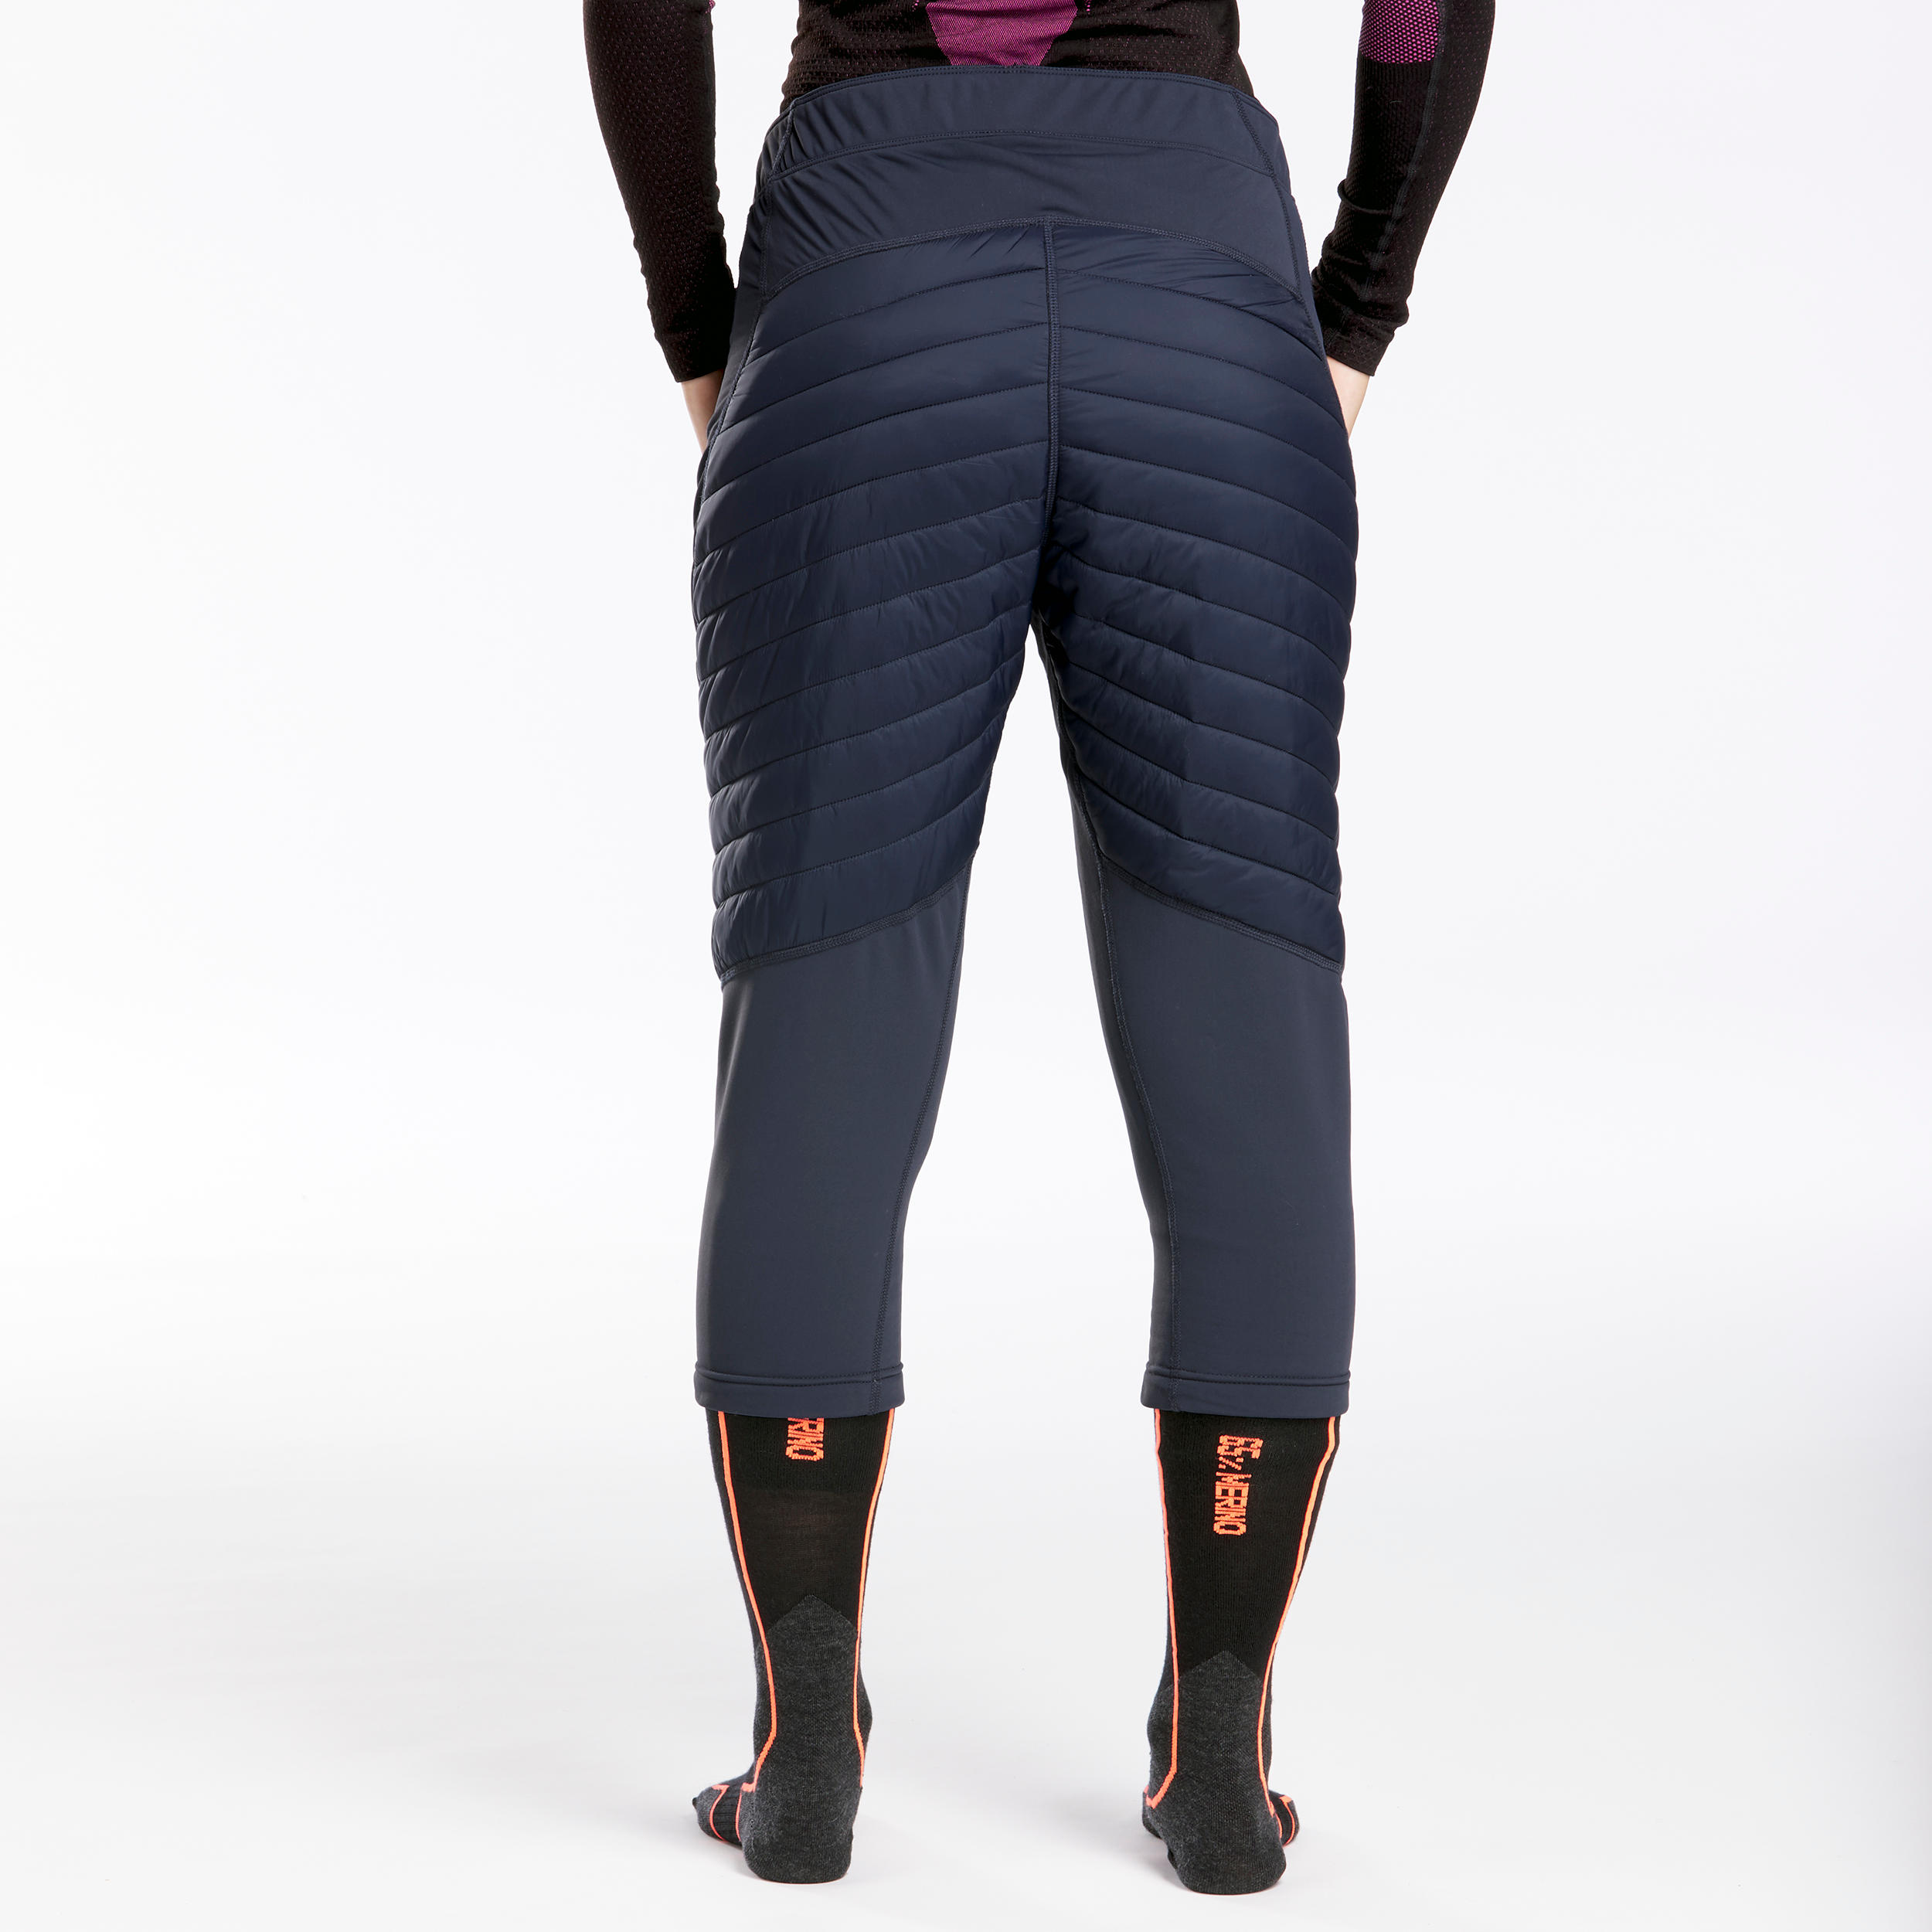 Women's Breathable Base Layer Pants - FR 900 Blue - Dark blue - Wedze -  Decathlon